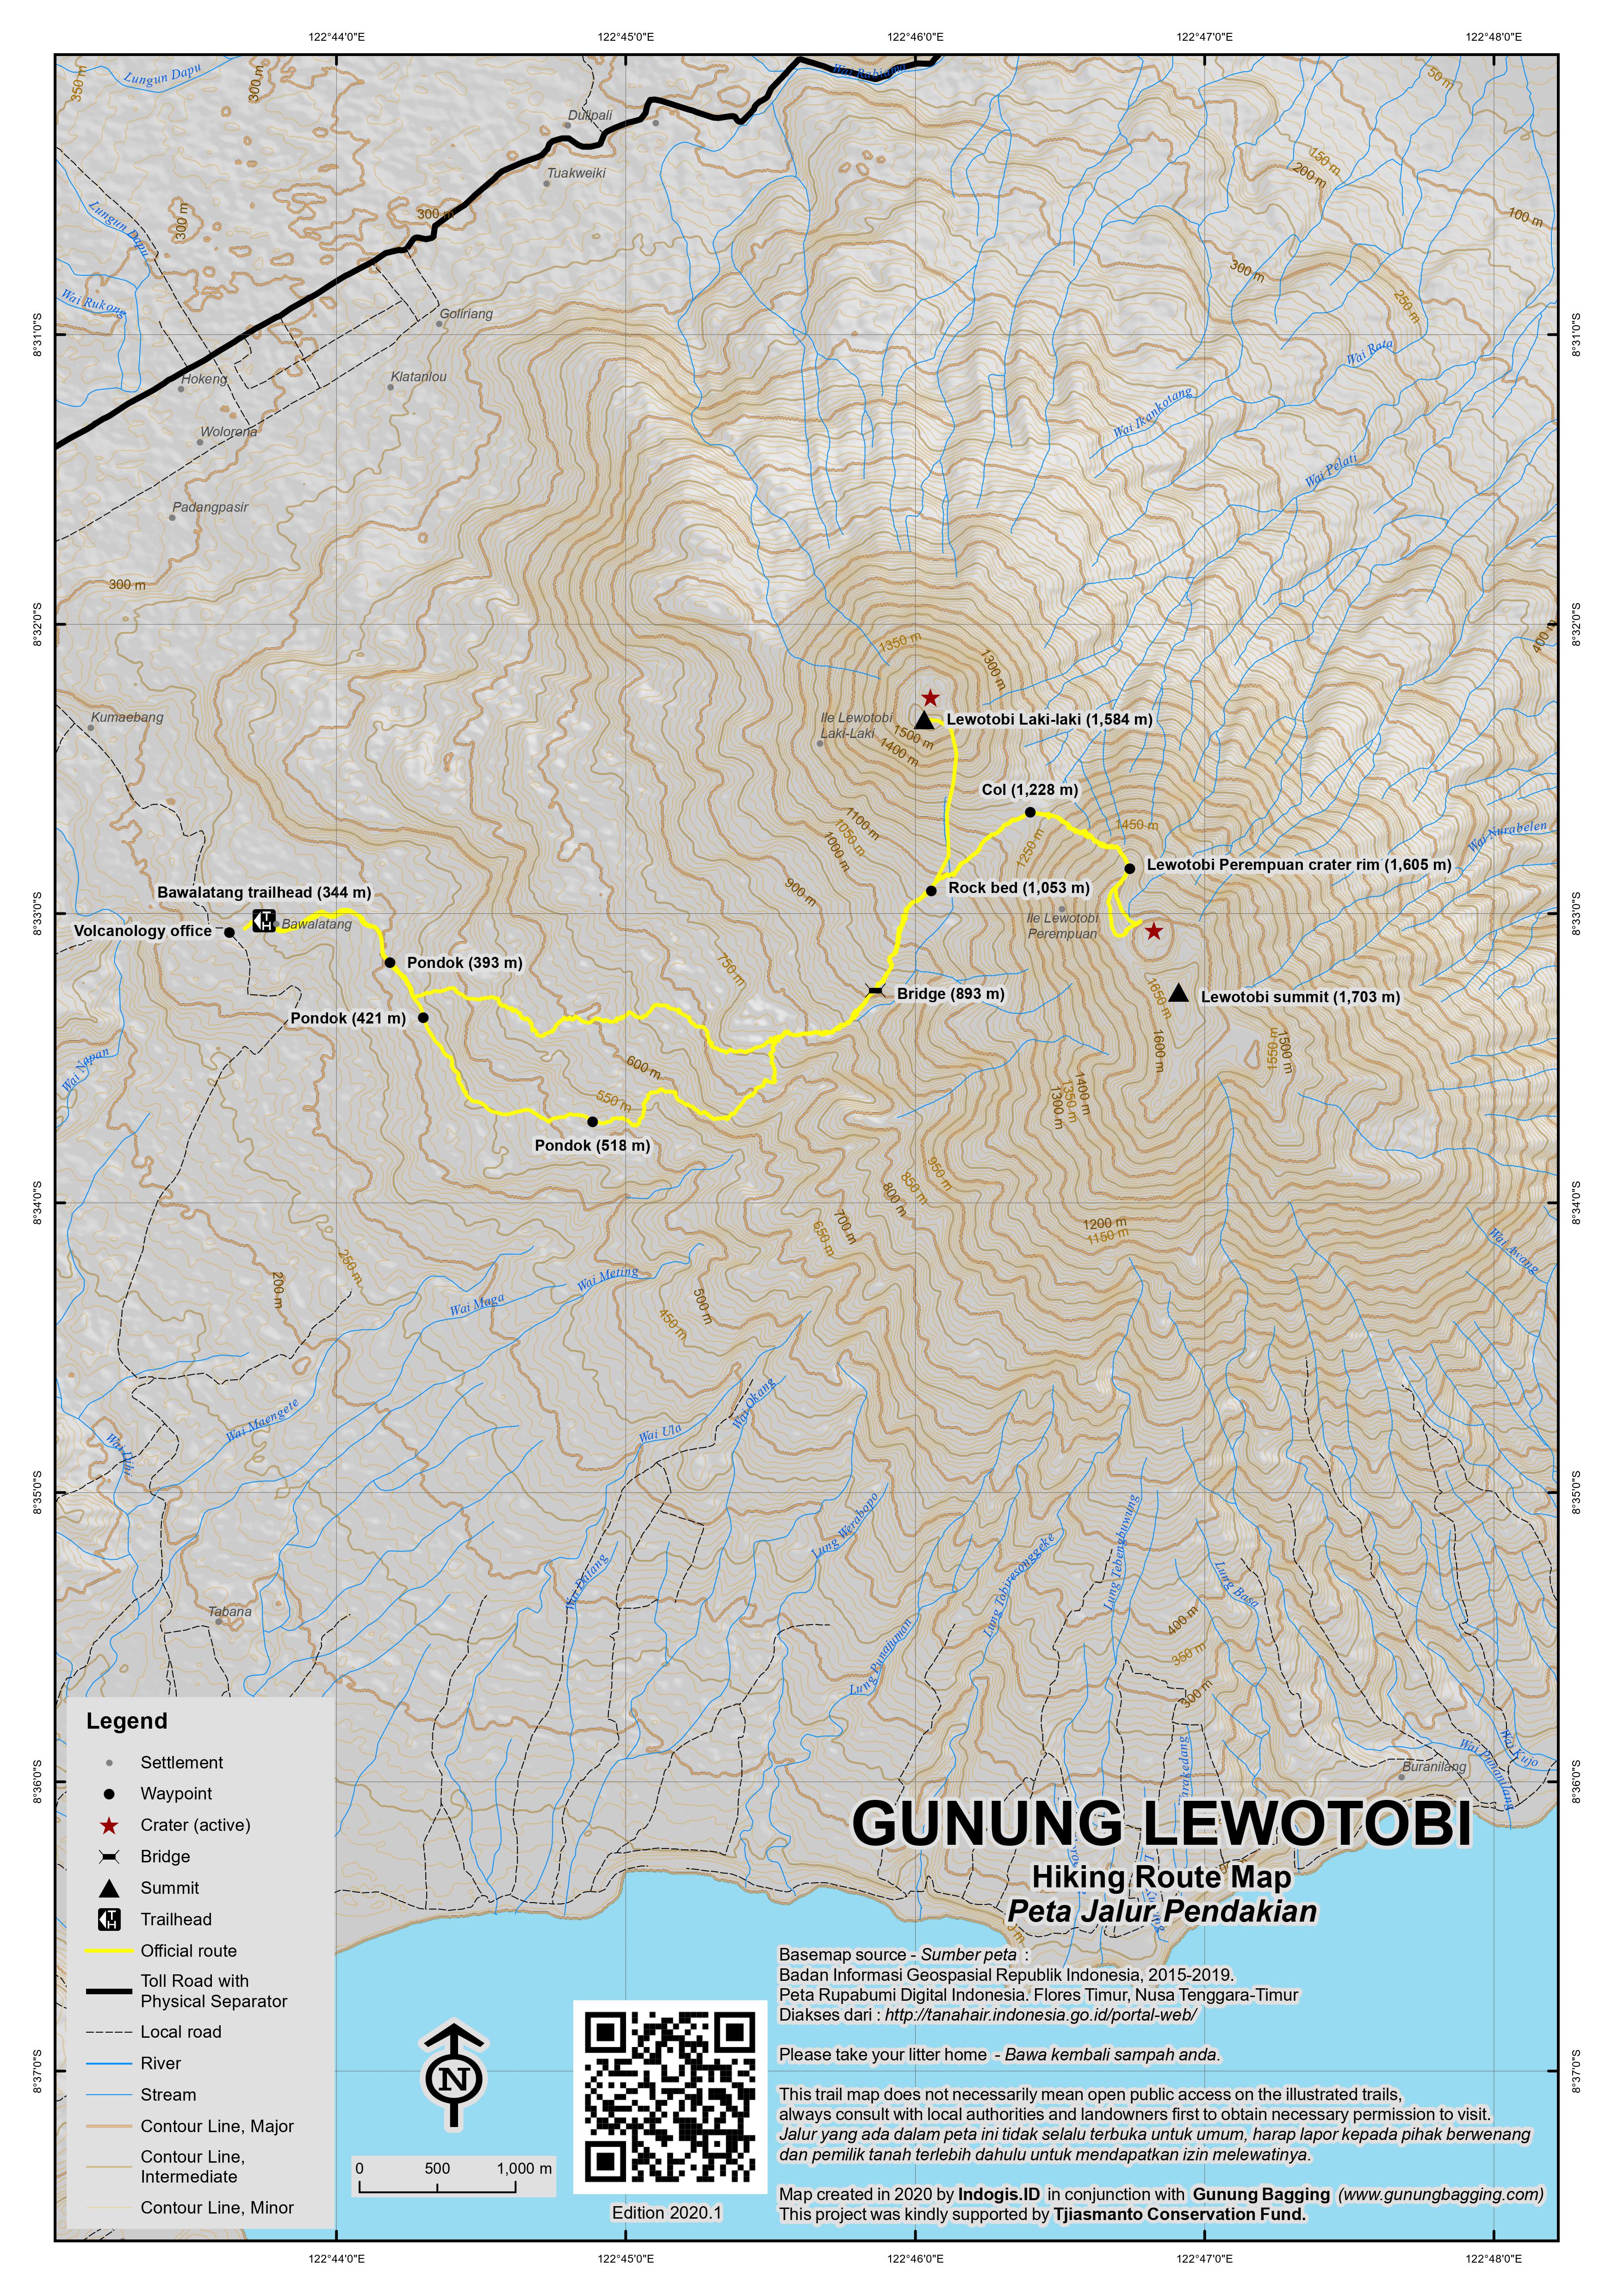 Peta Jalur Pendakian Gunung Lewotobi